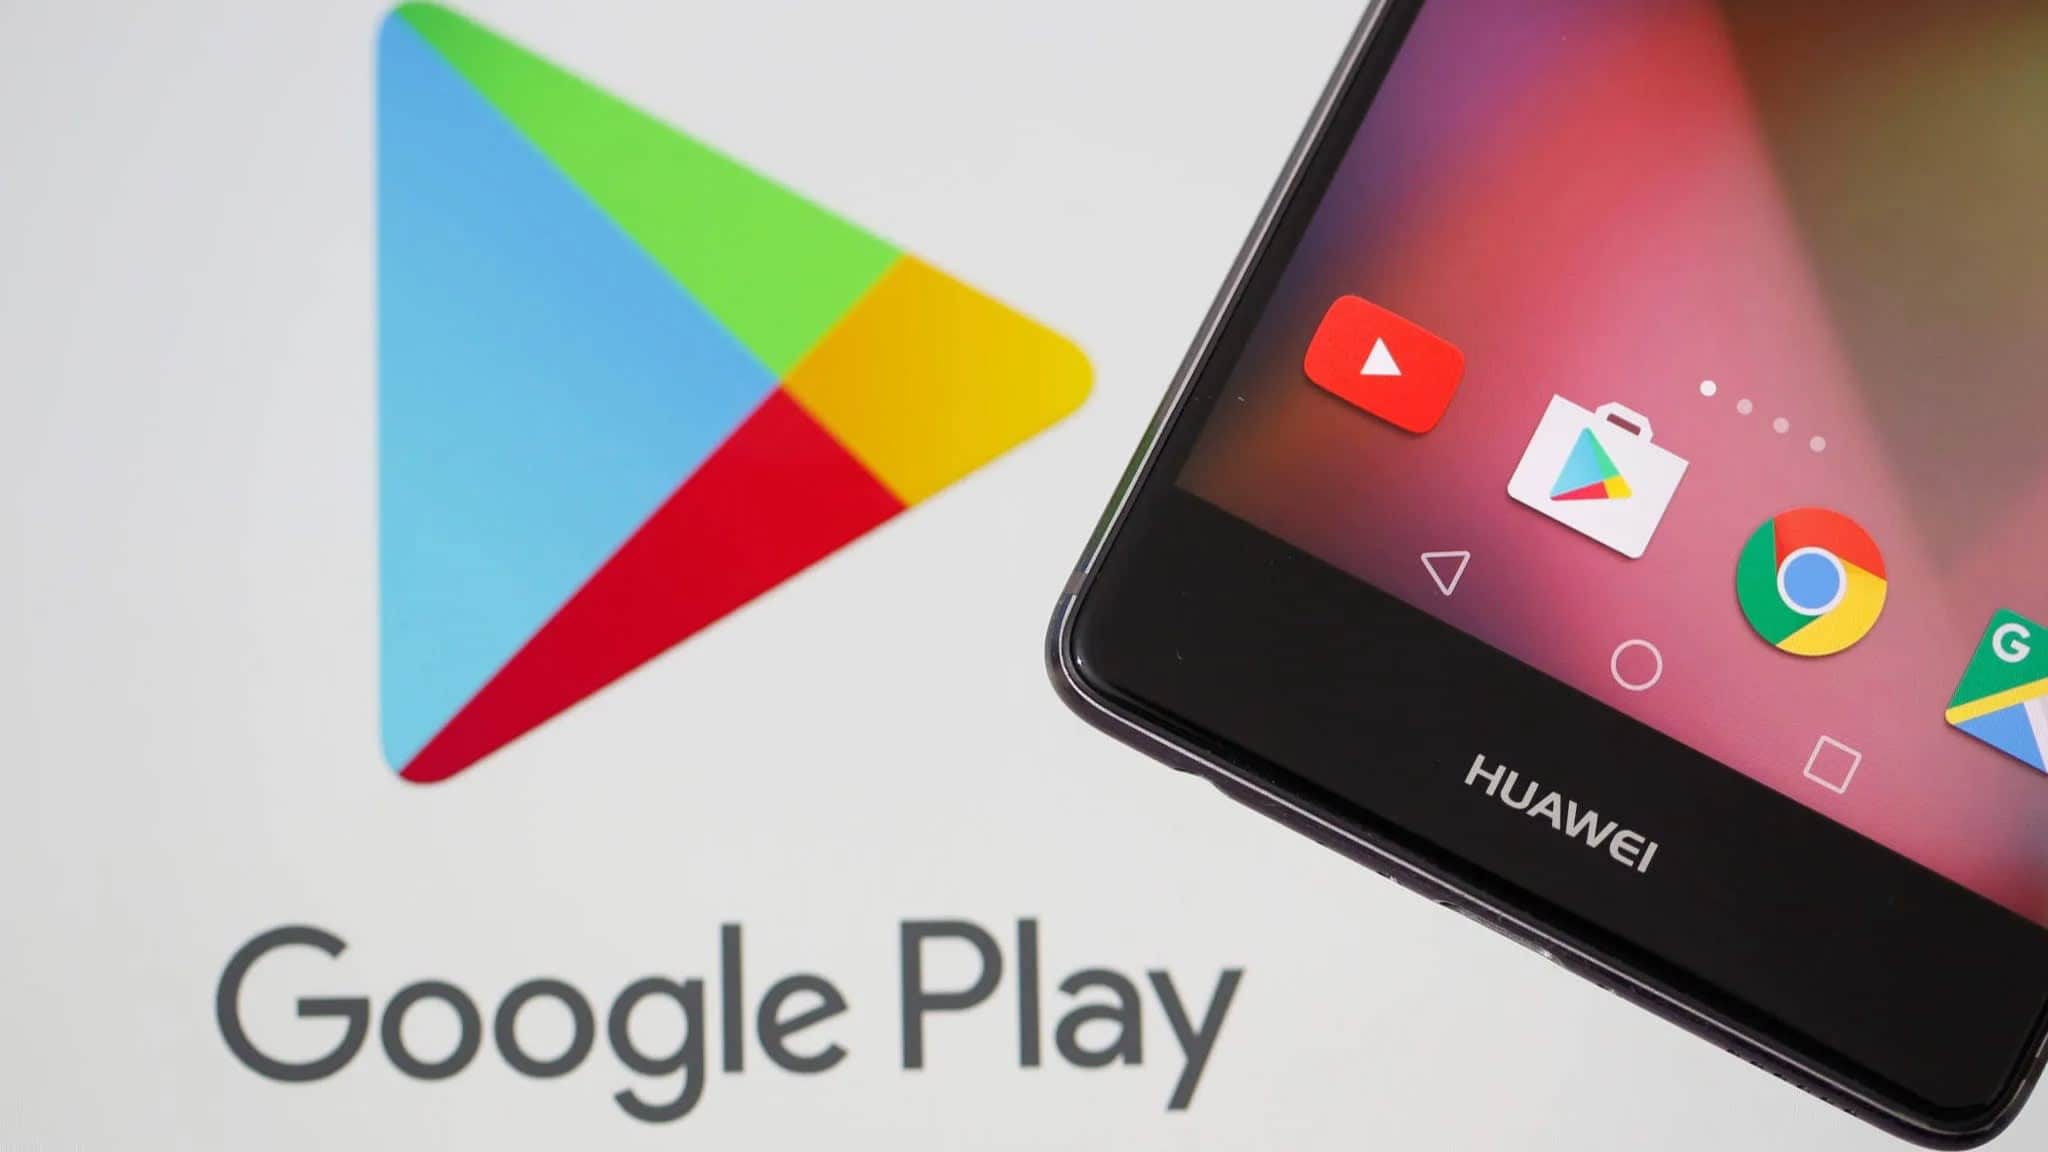 Google Play Huawei